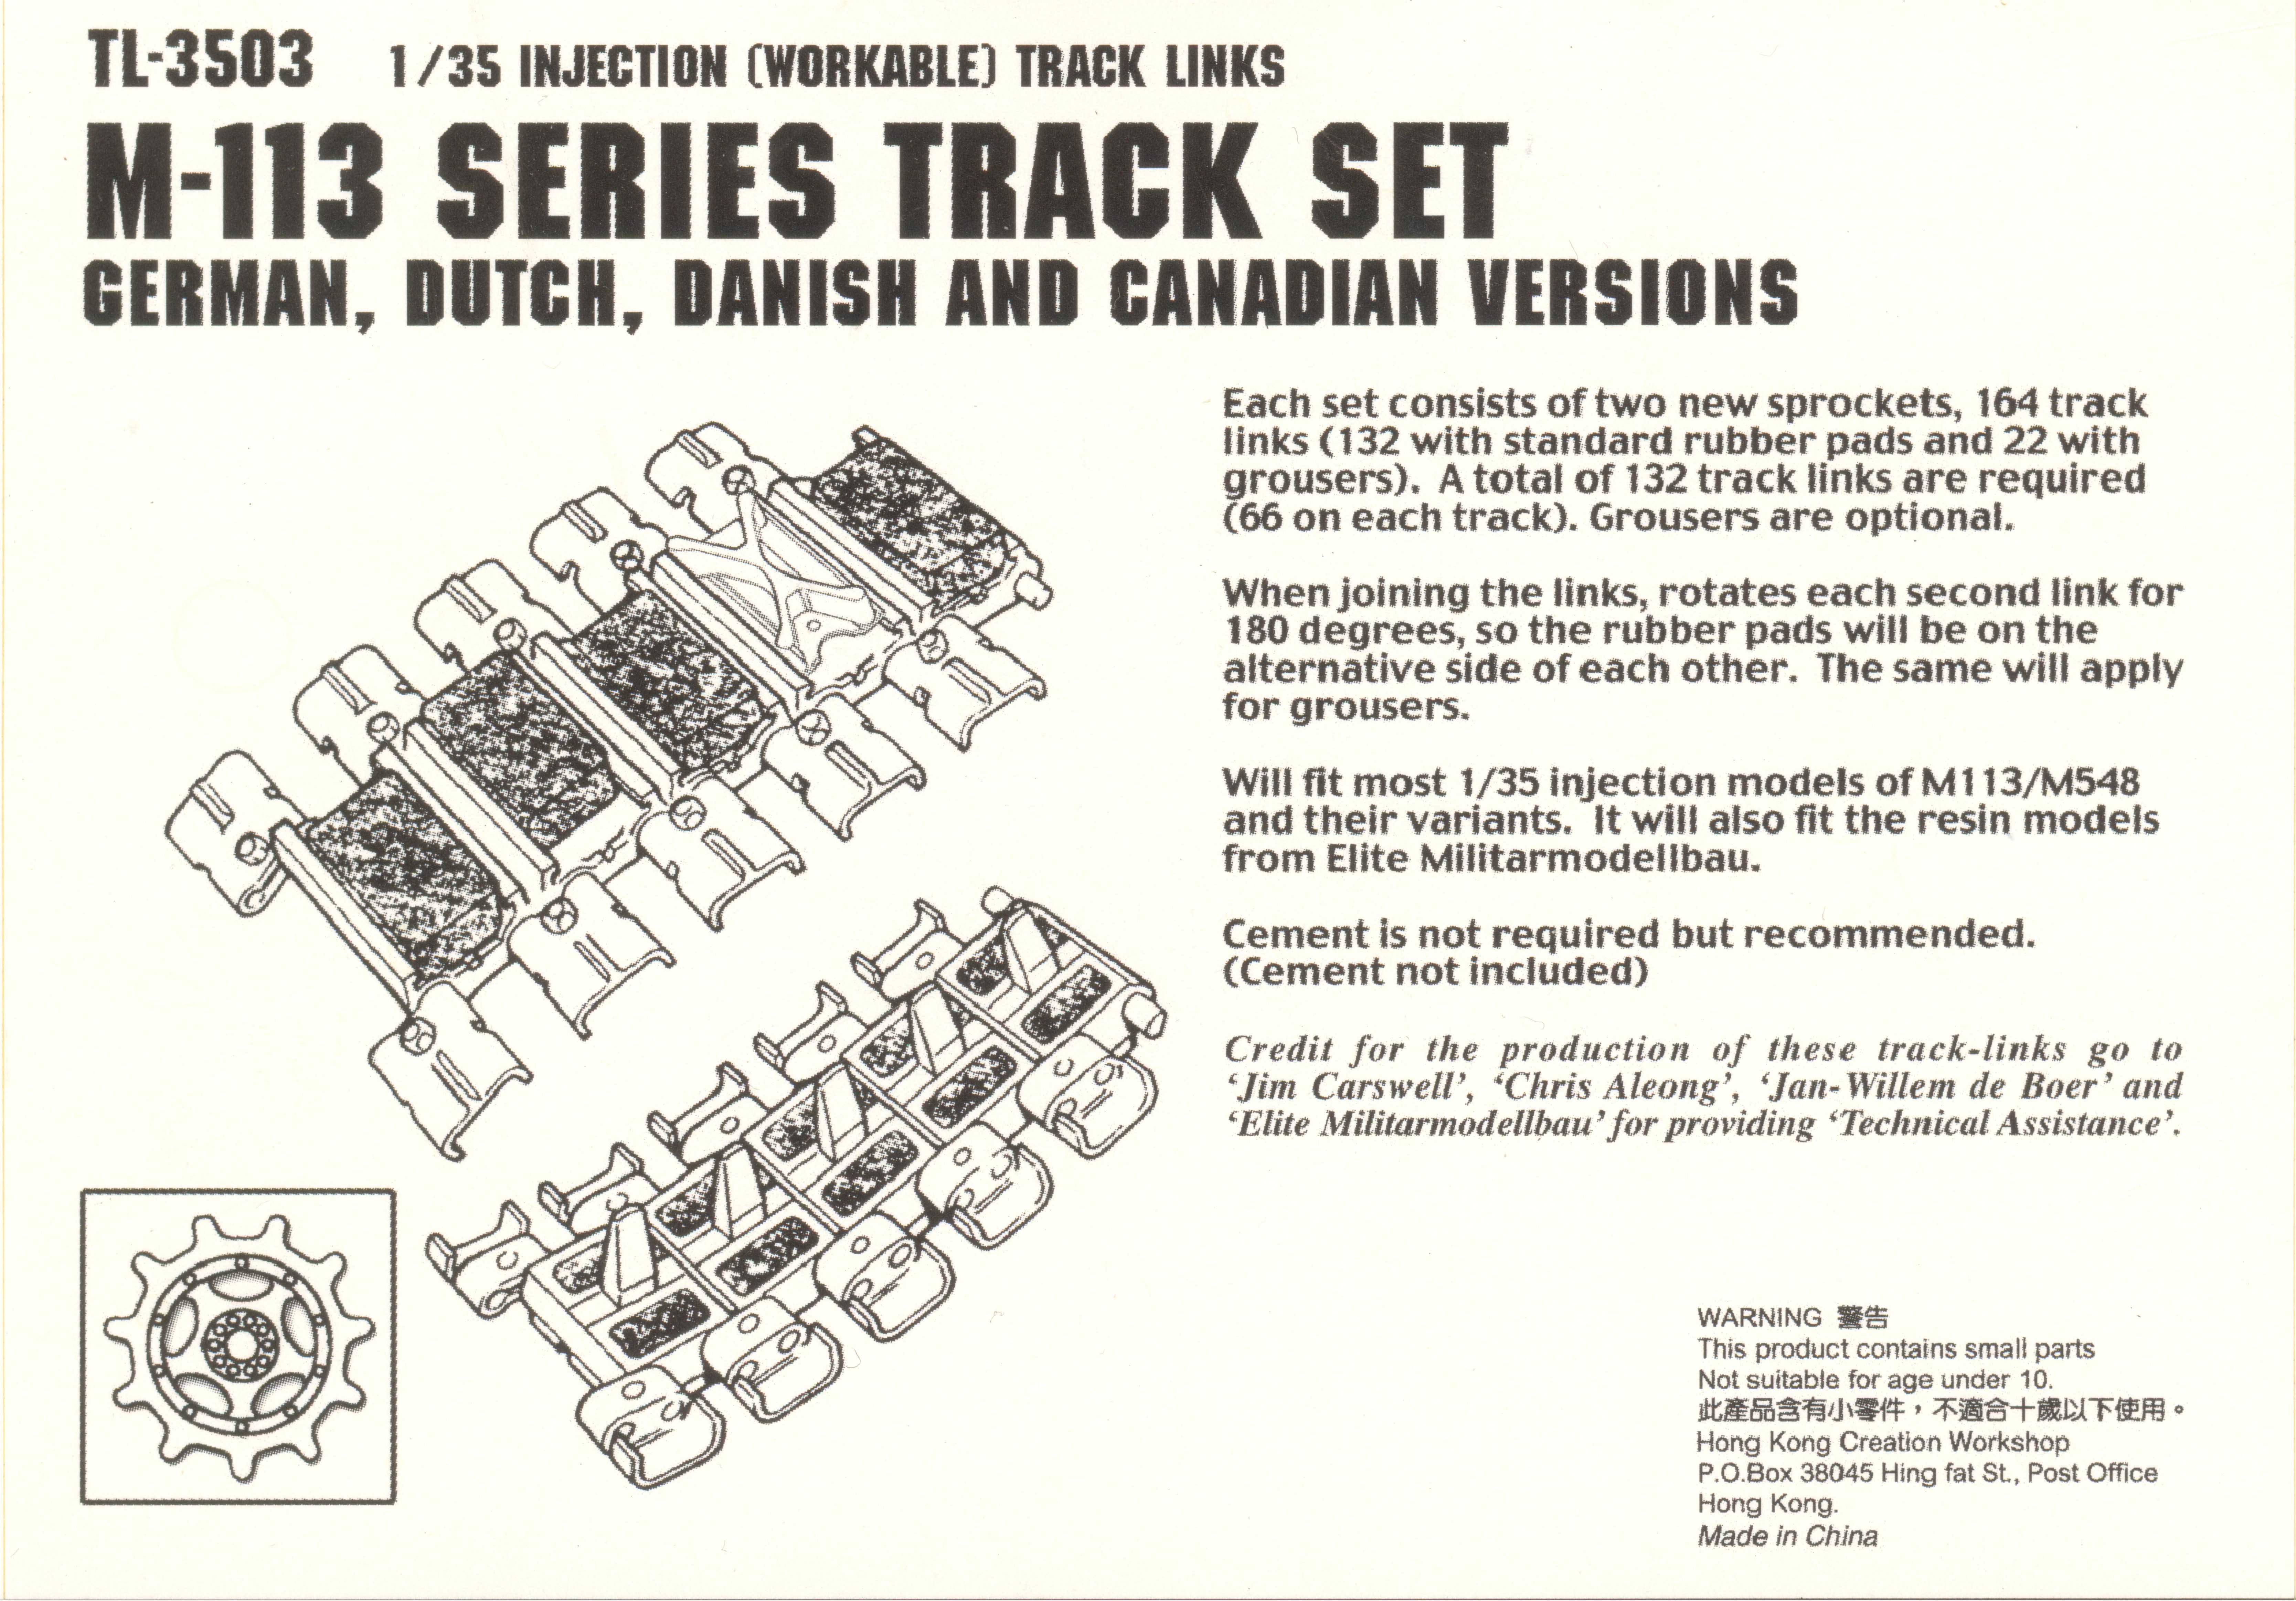 TL-3503 M113 Series Track Set